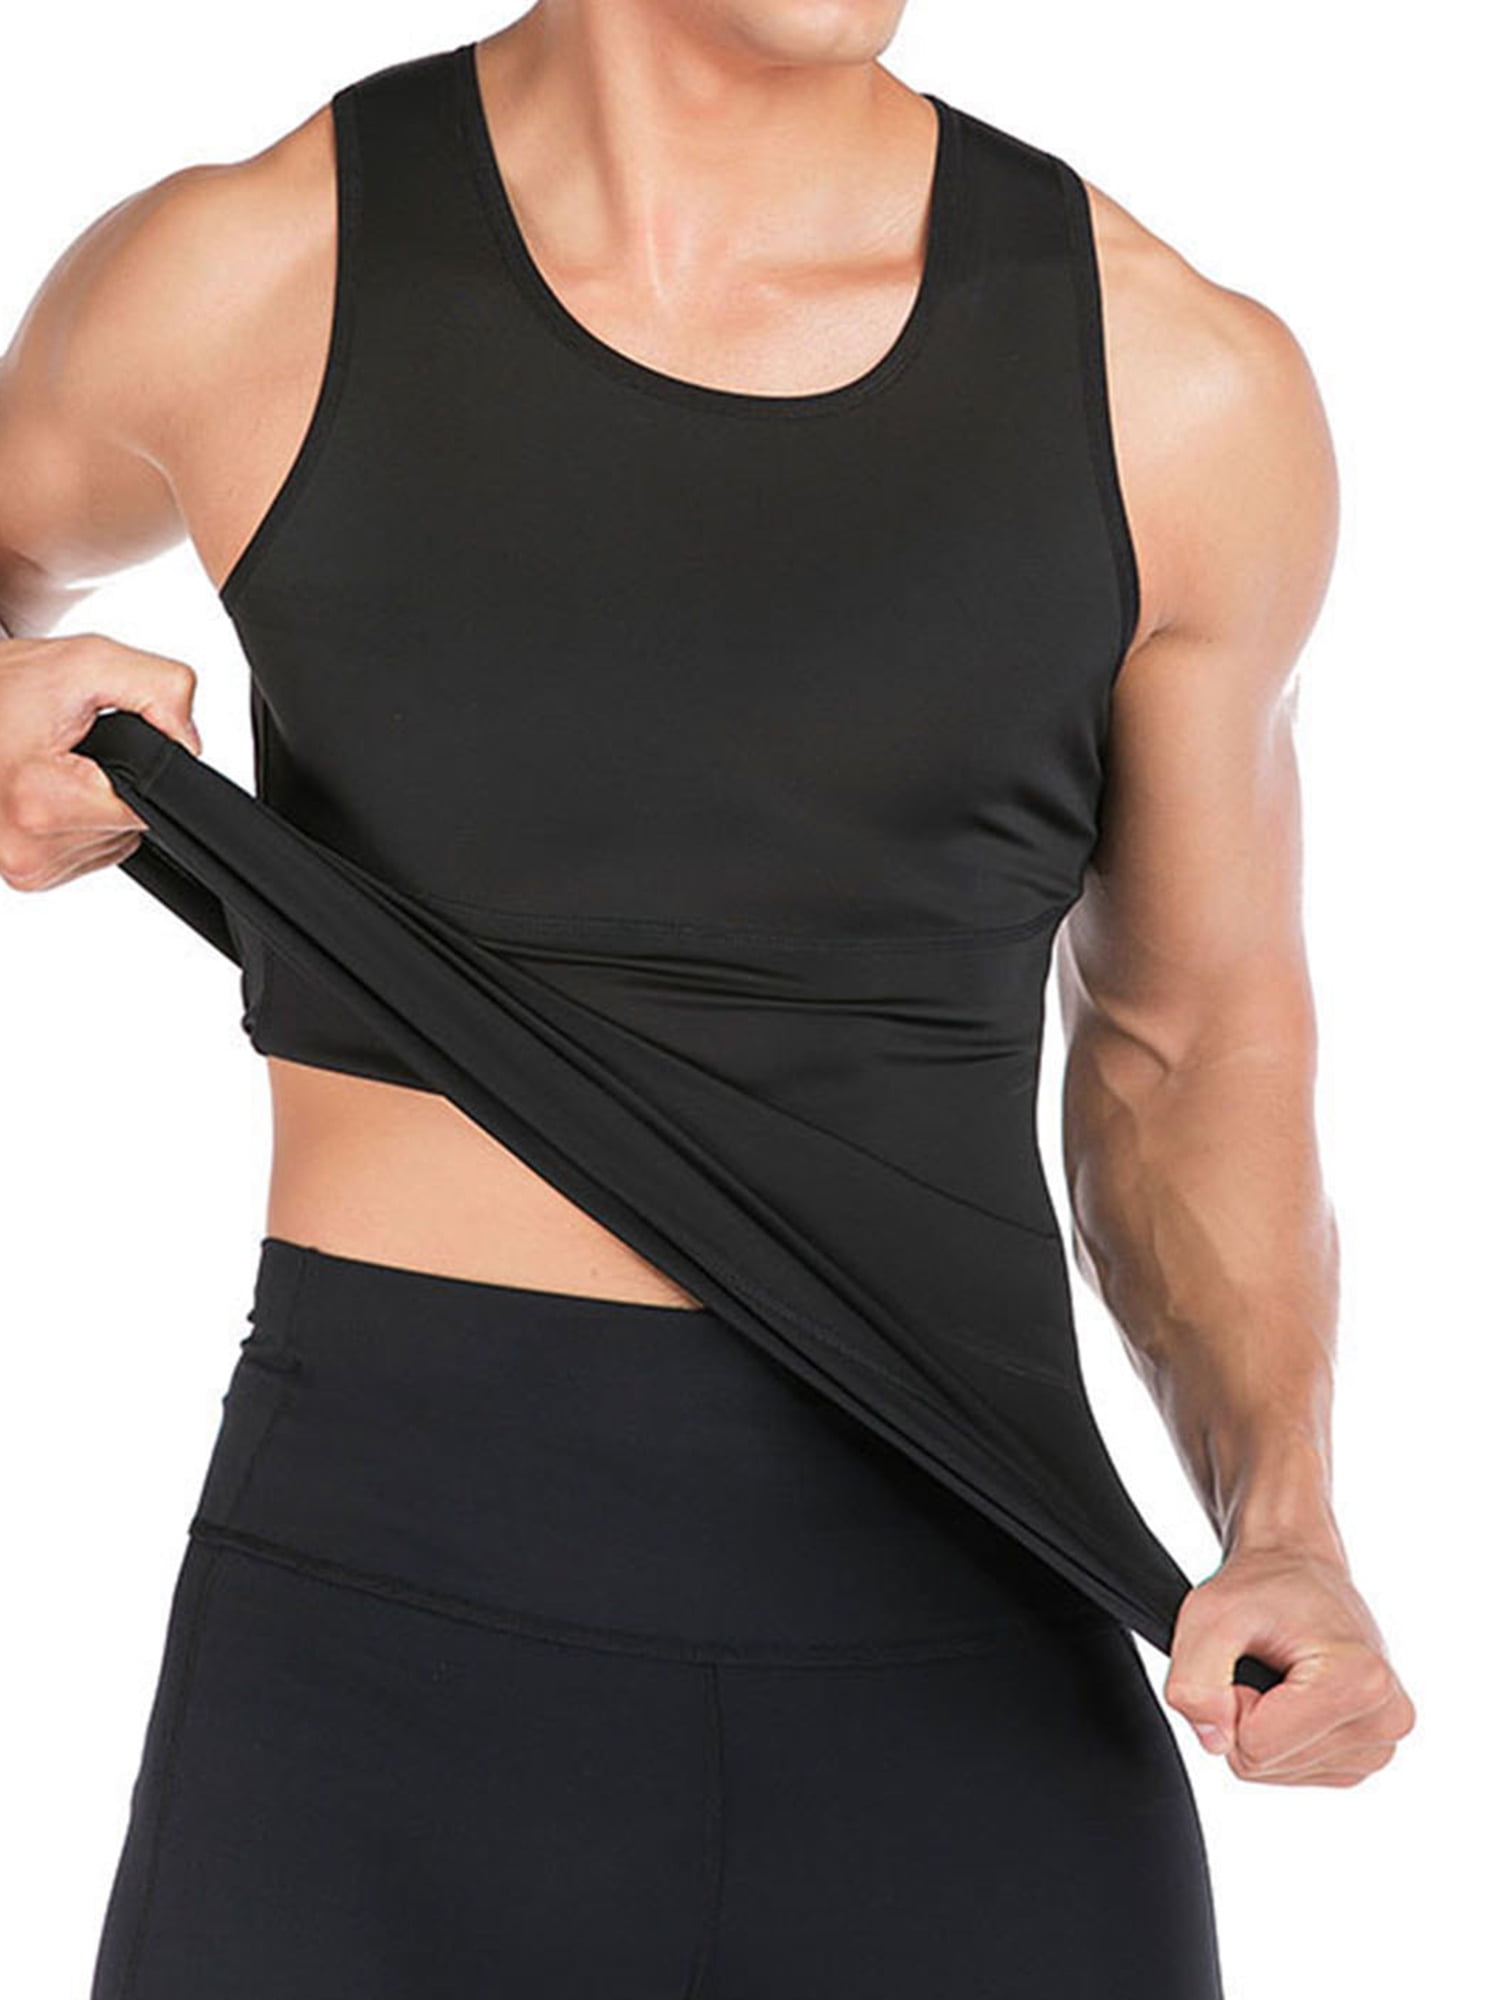 DODOING Mens Black Compression Shirt Slimming Body Shaper Workout Tank ...